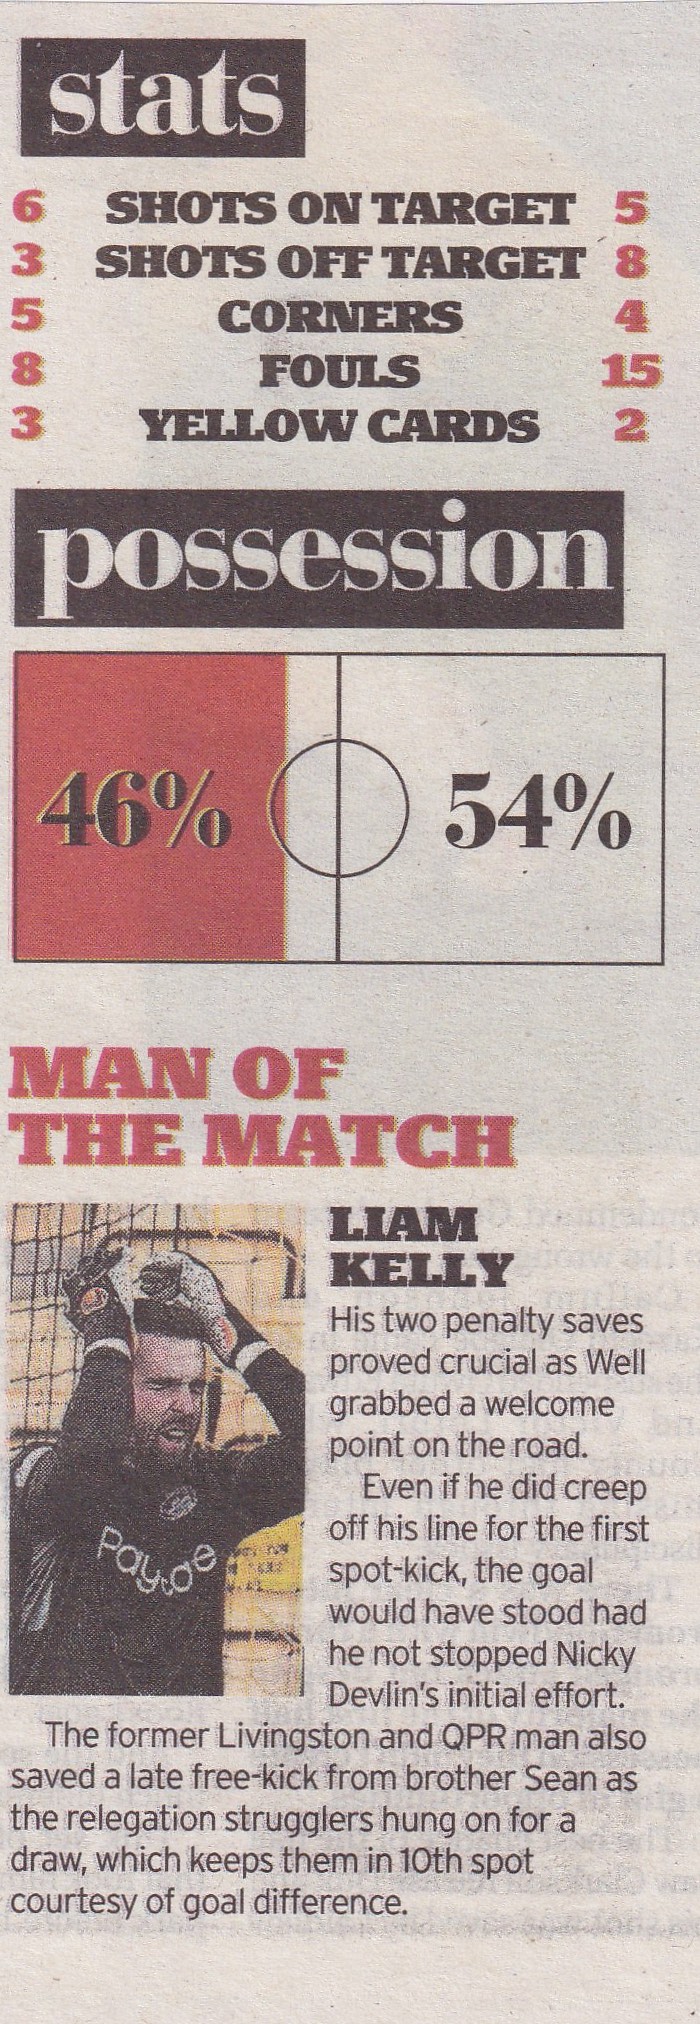 Motherwell versus Livingston Newspaper Match Report